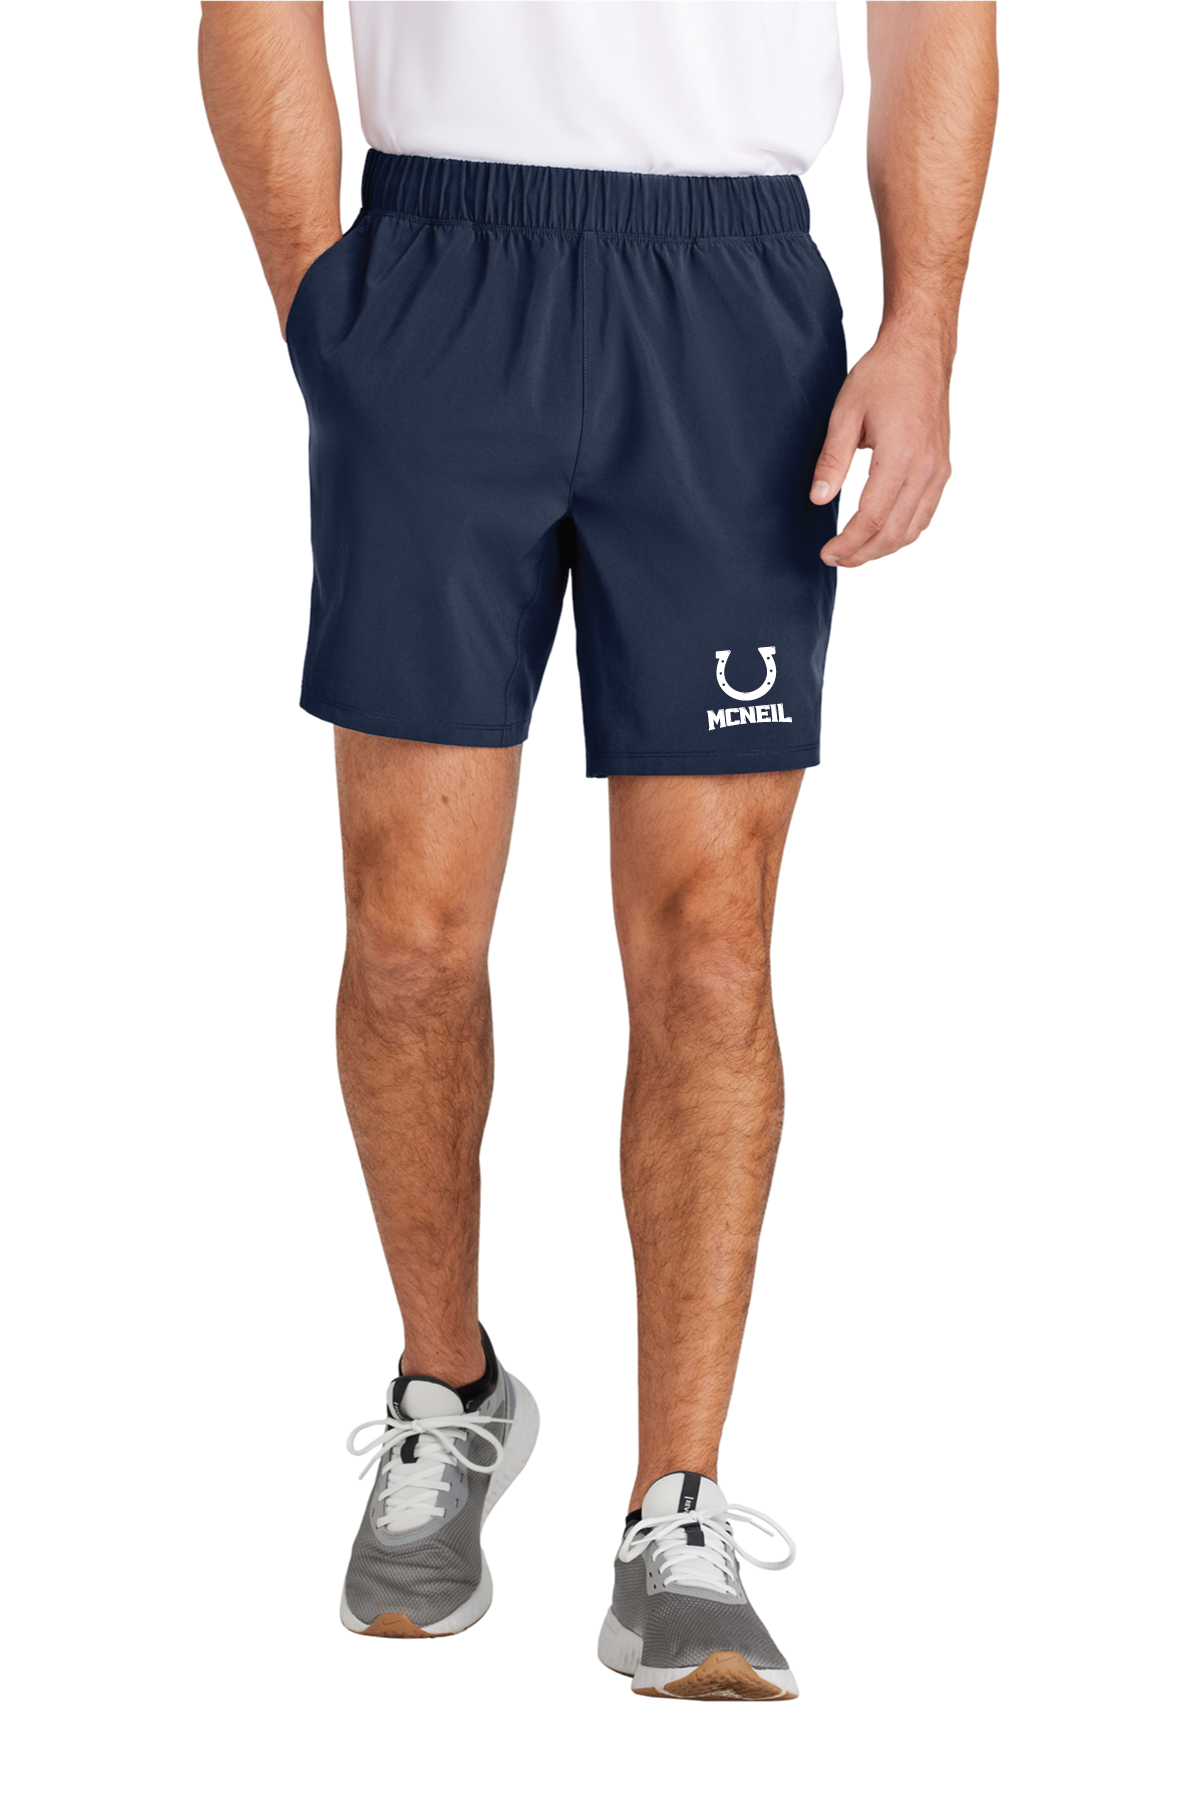 Mavs Baseball - Men's Athletic Shorts